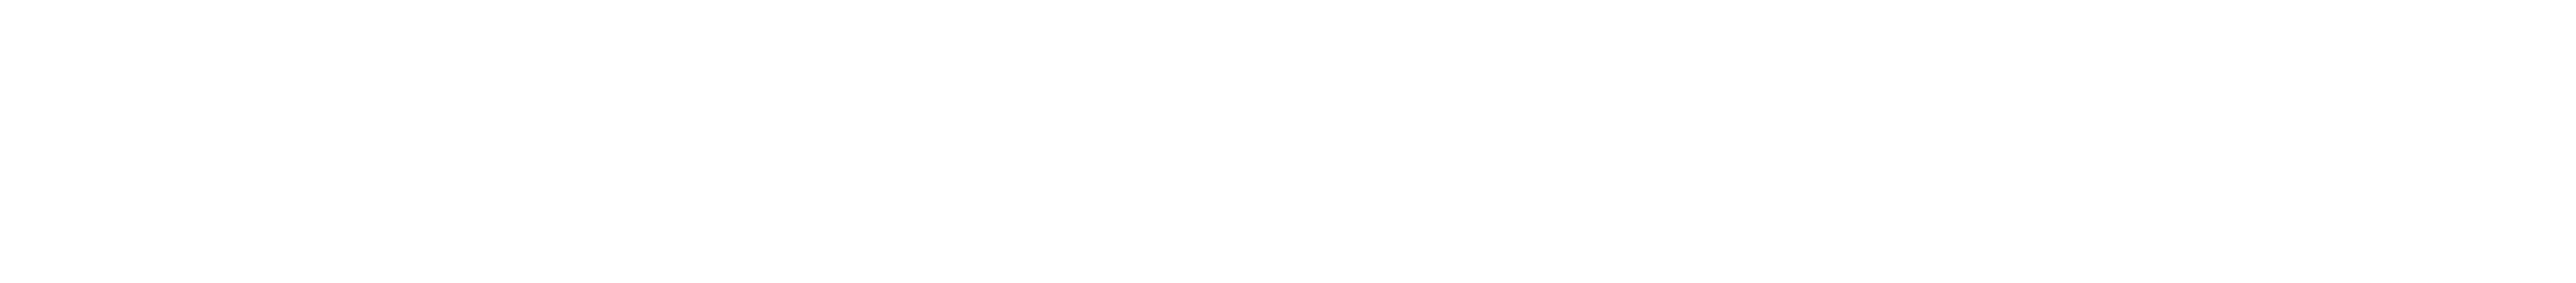 Gruppo Enercom